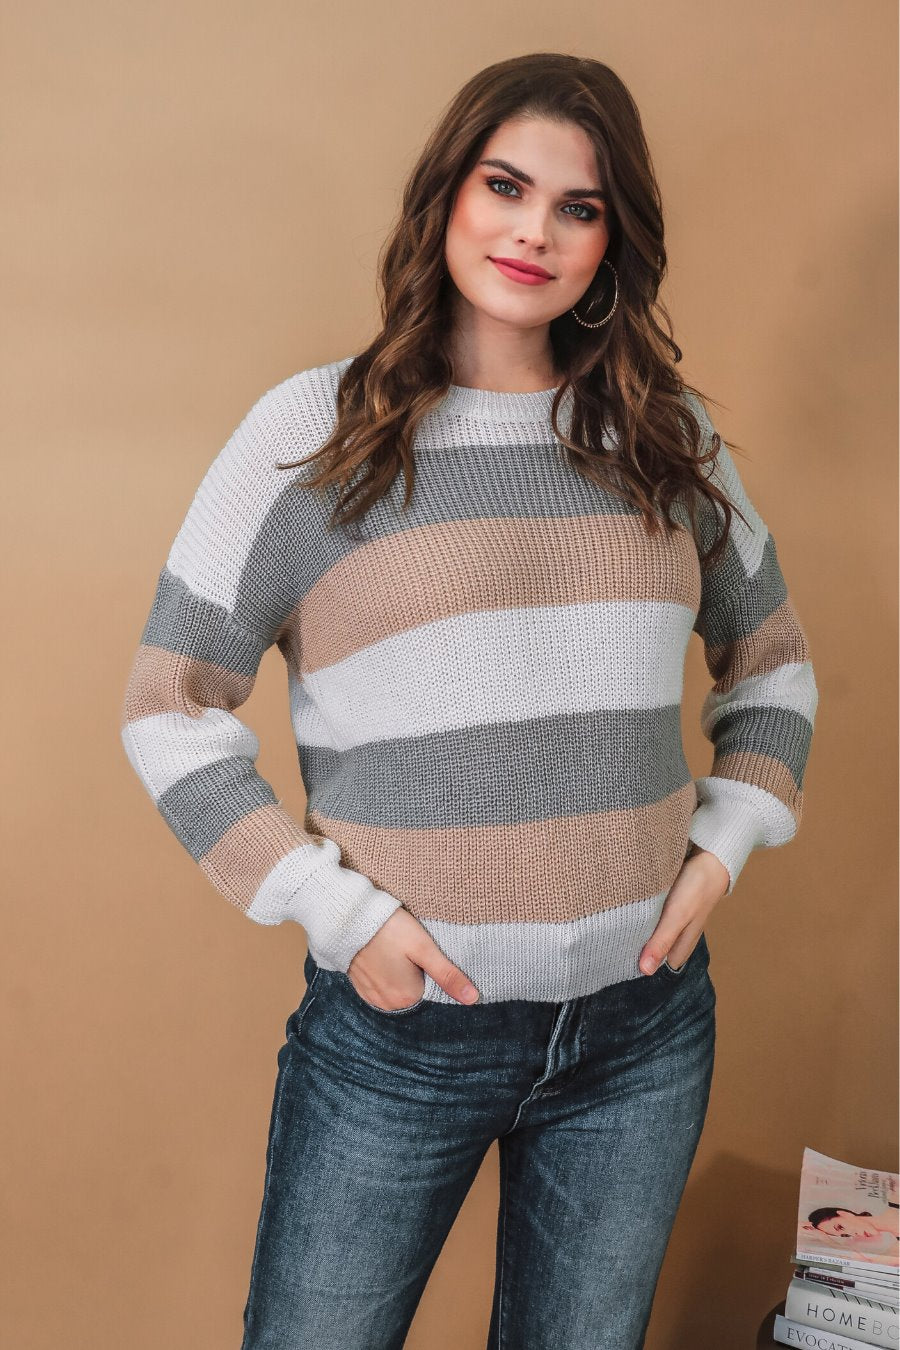 Vermont Striped Sweater